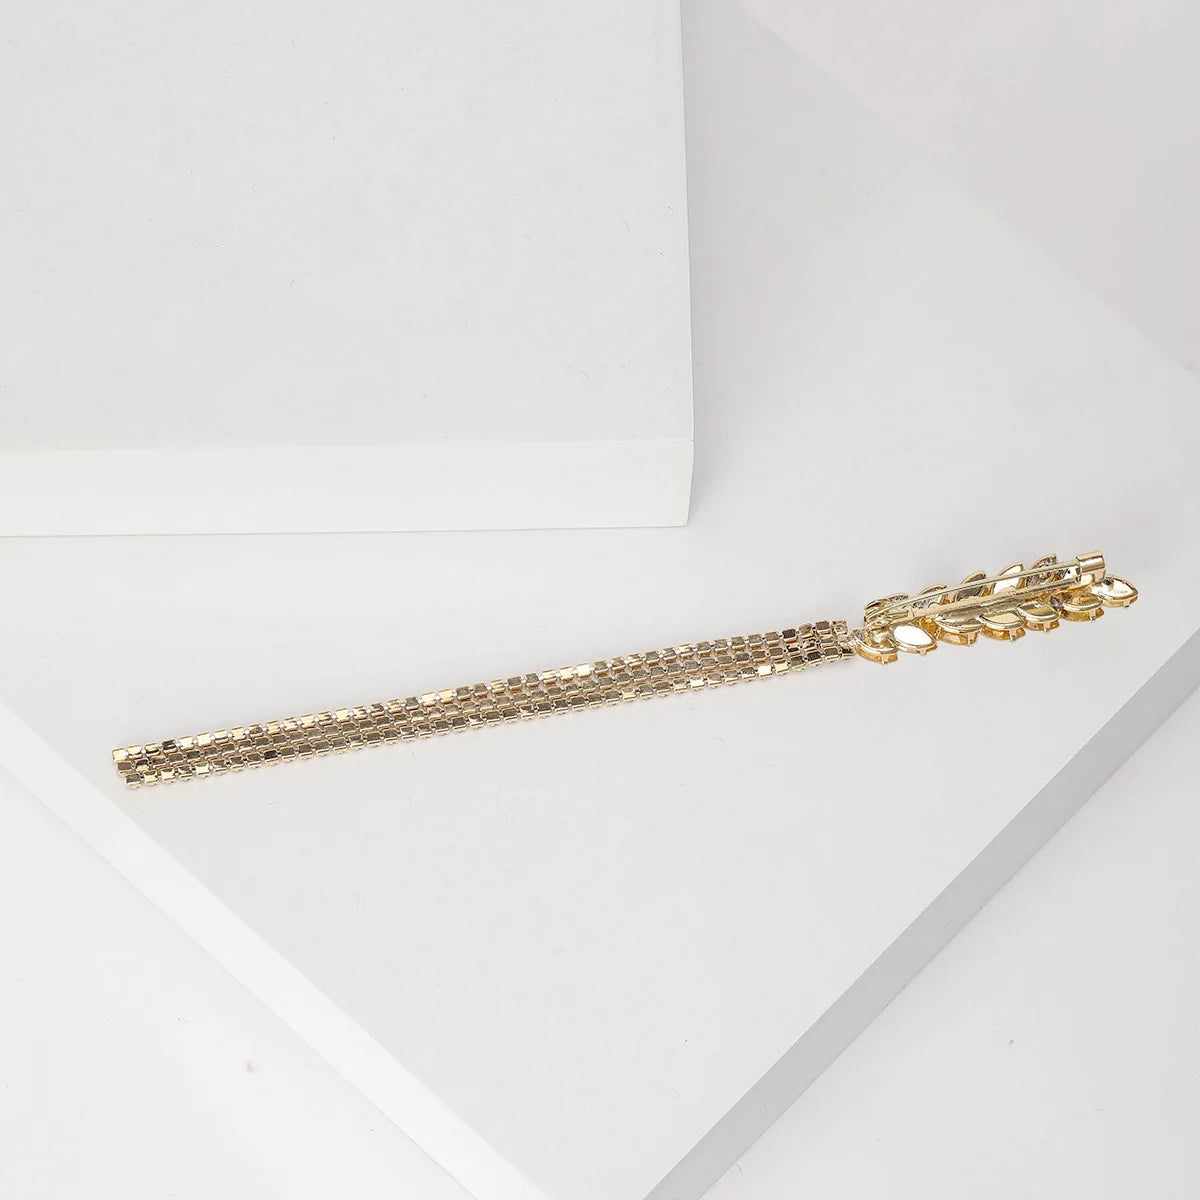 Luxury Brooch Rhinestone Long Thread Tassel Lapel Pins Ear Of Wheat Brooches Jewelry for Clothing